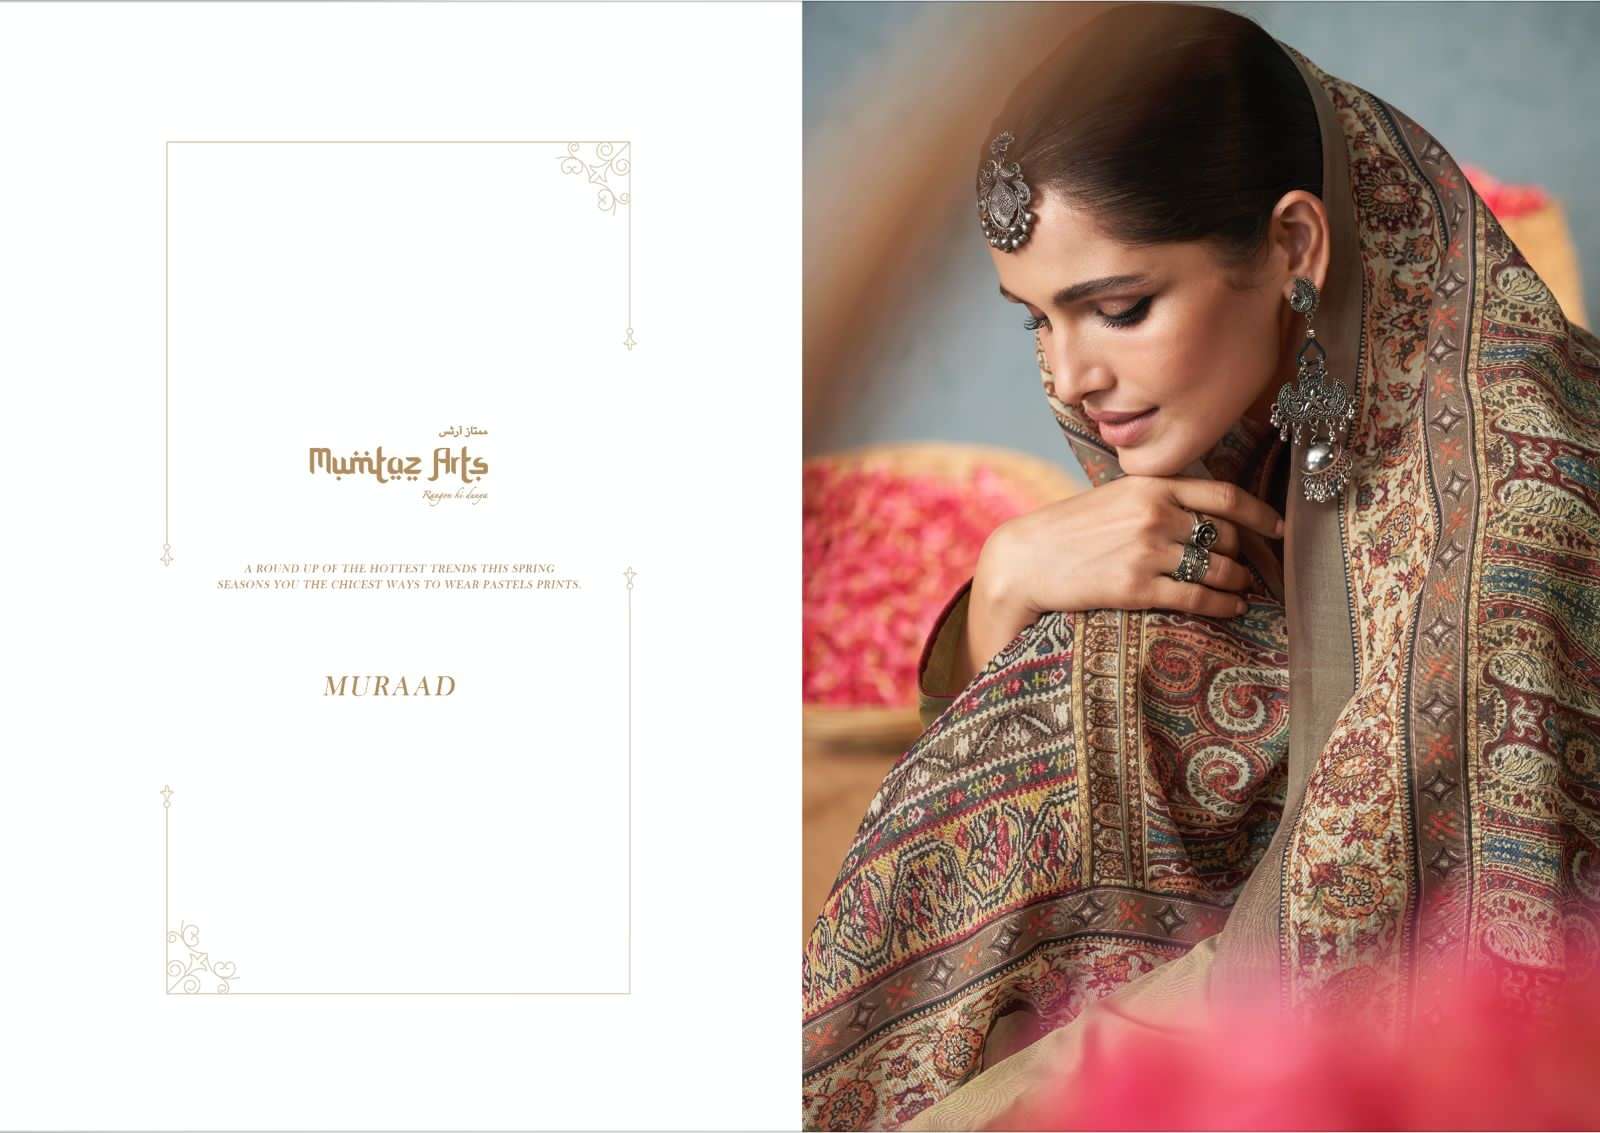 mumtaz arts muraad 4001-4007 series stylish designer salwar kameez wholesale price surat